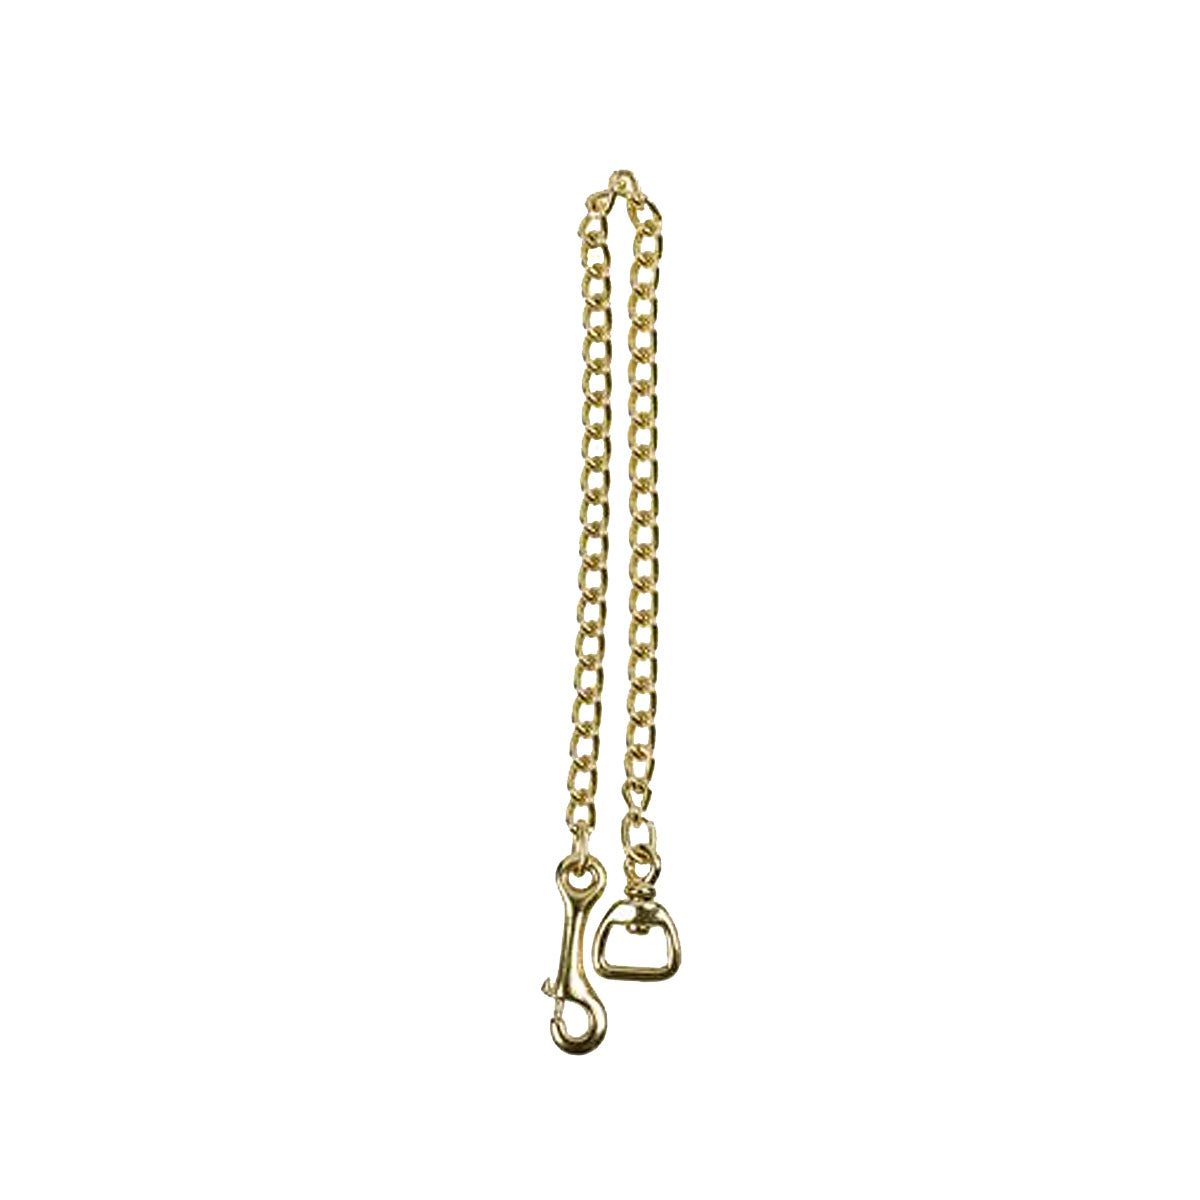 Perri's Brass Plate Chain